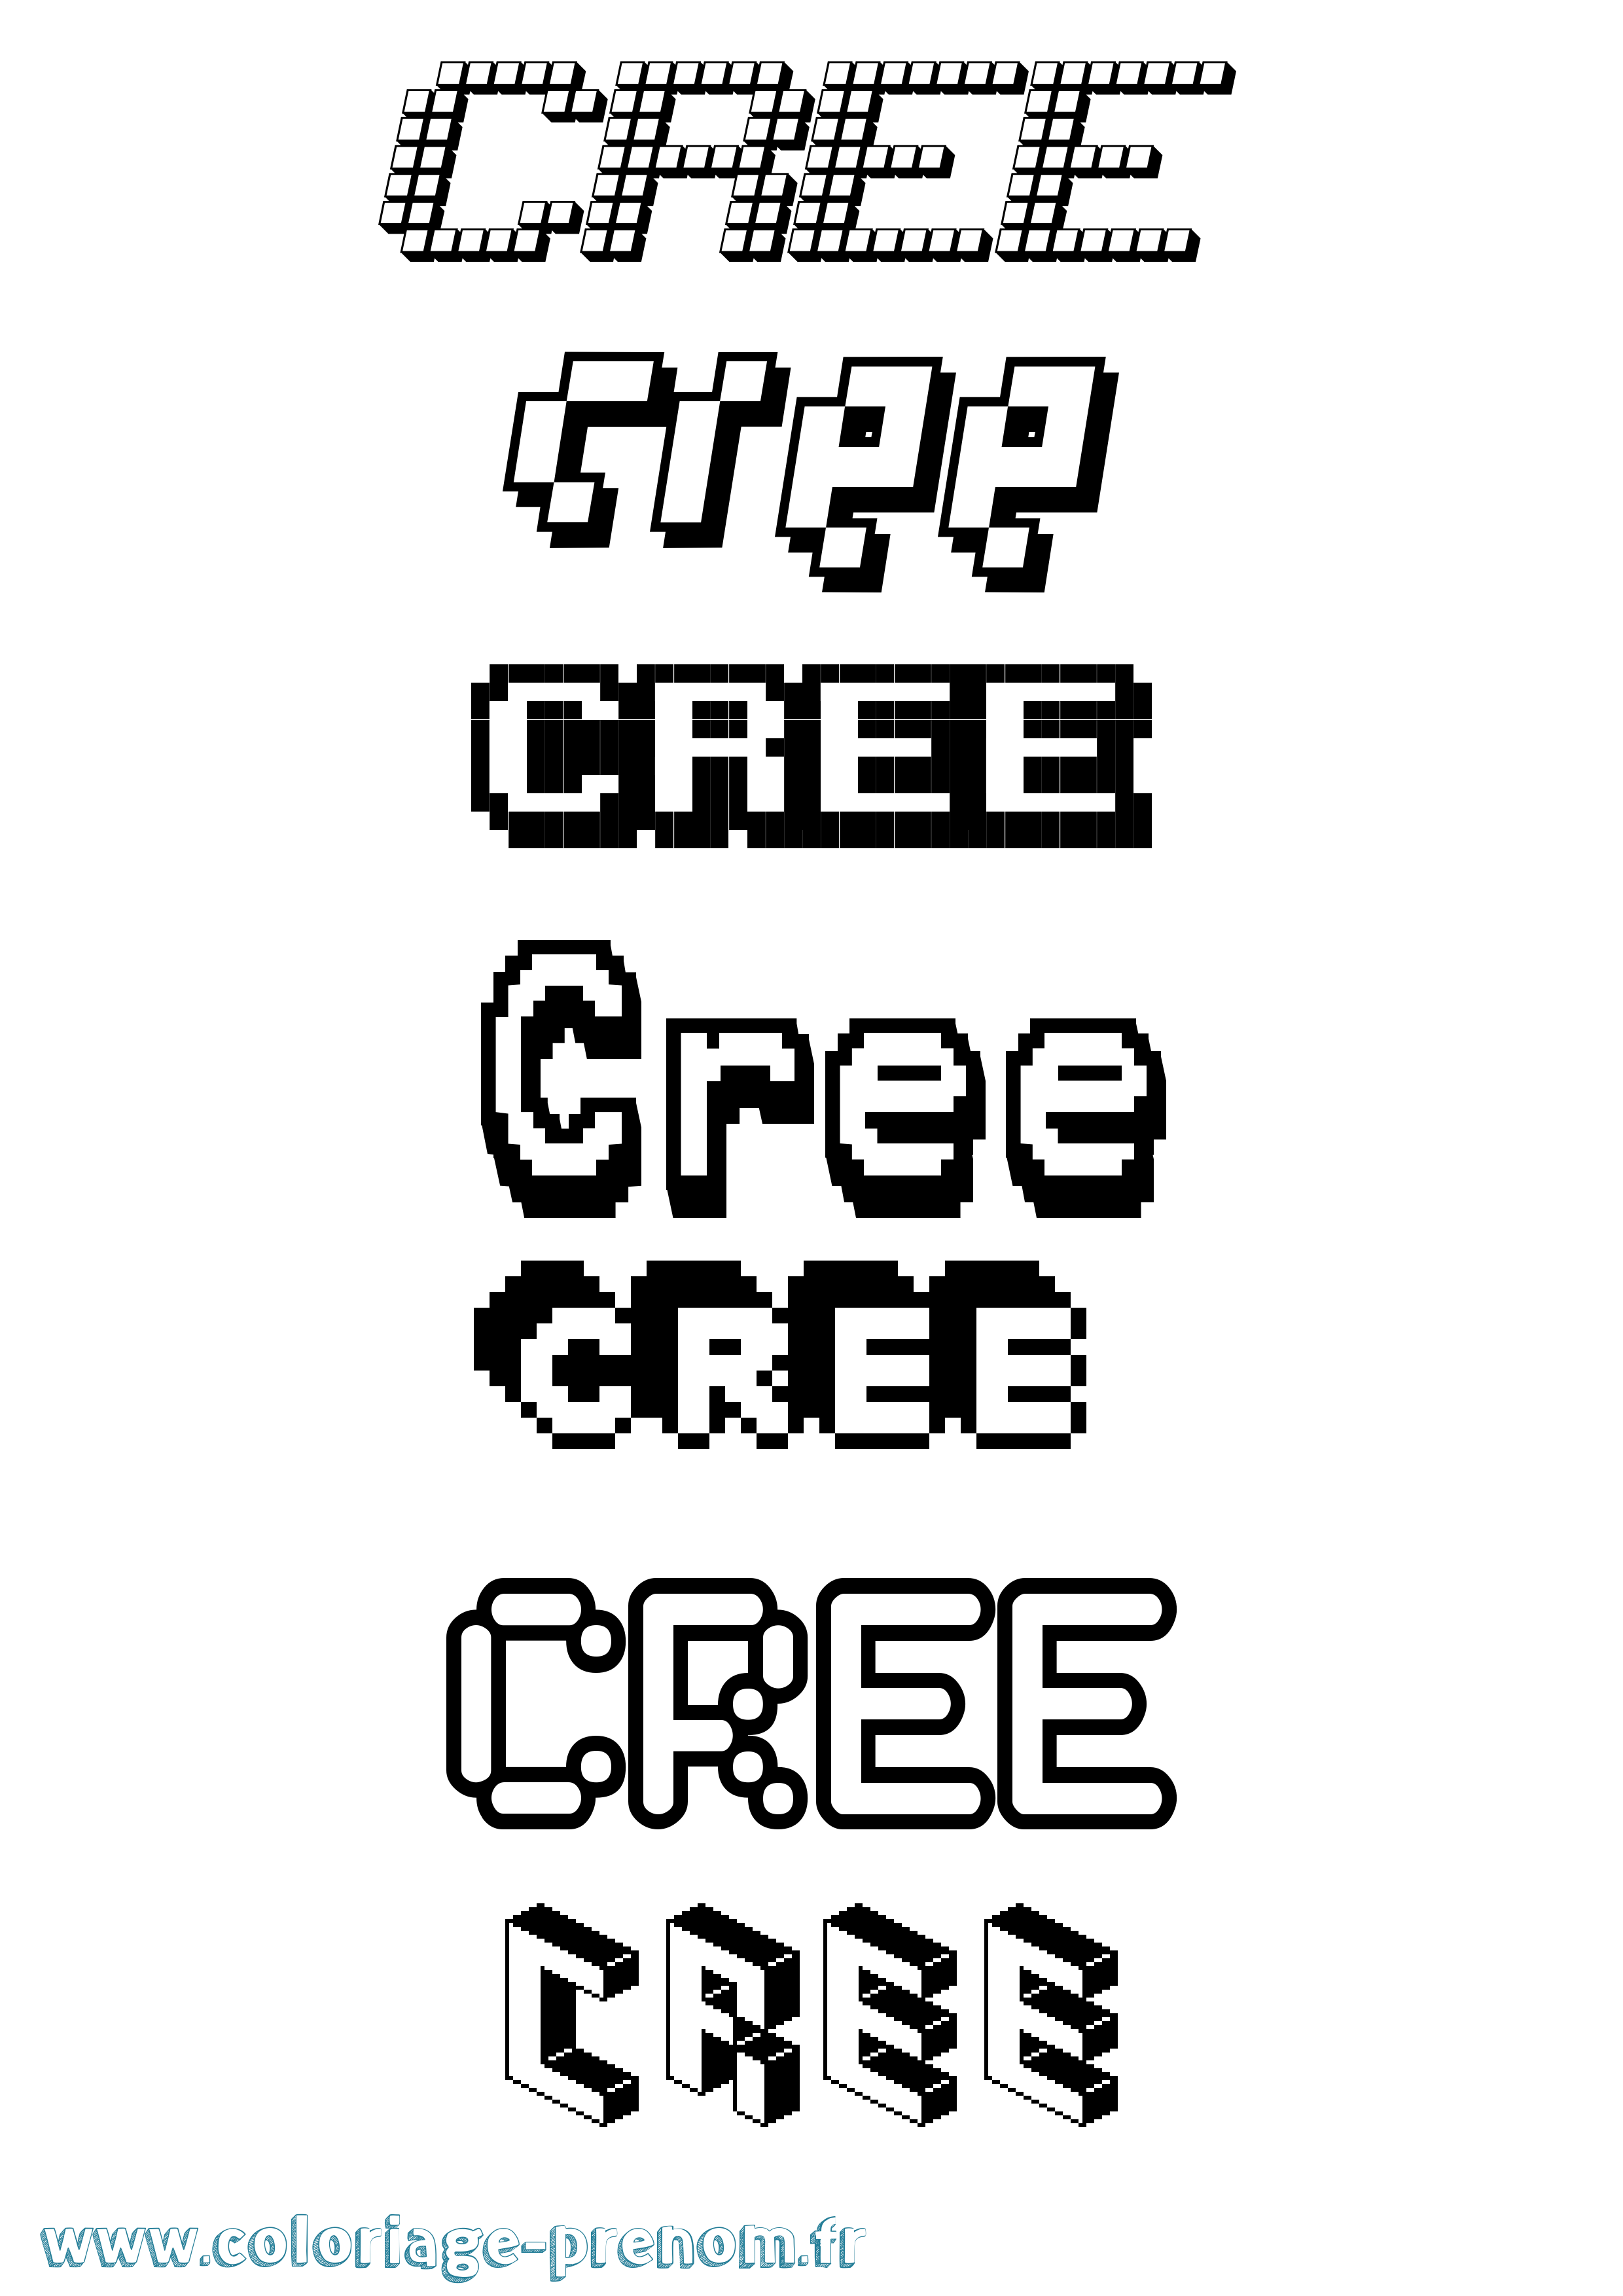 Coloriage prénom Cree Pixel